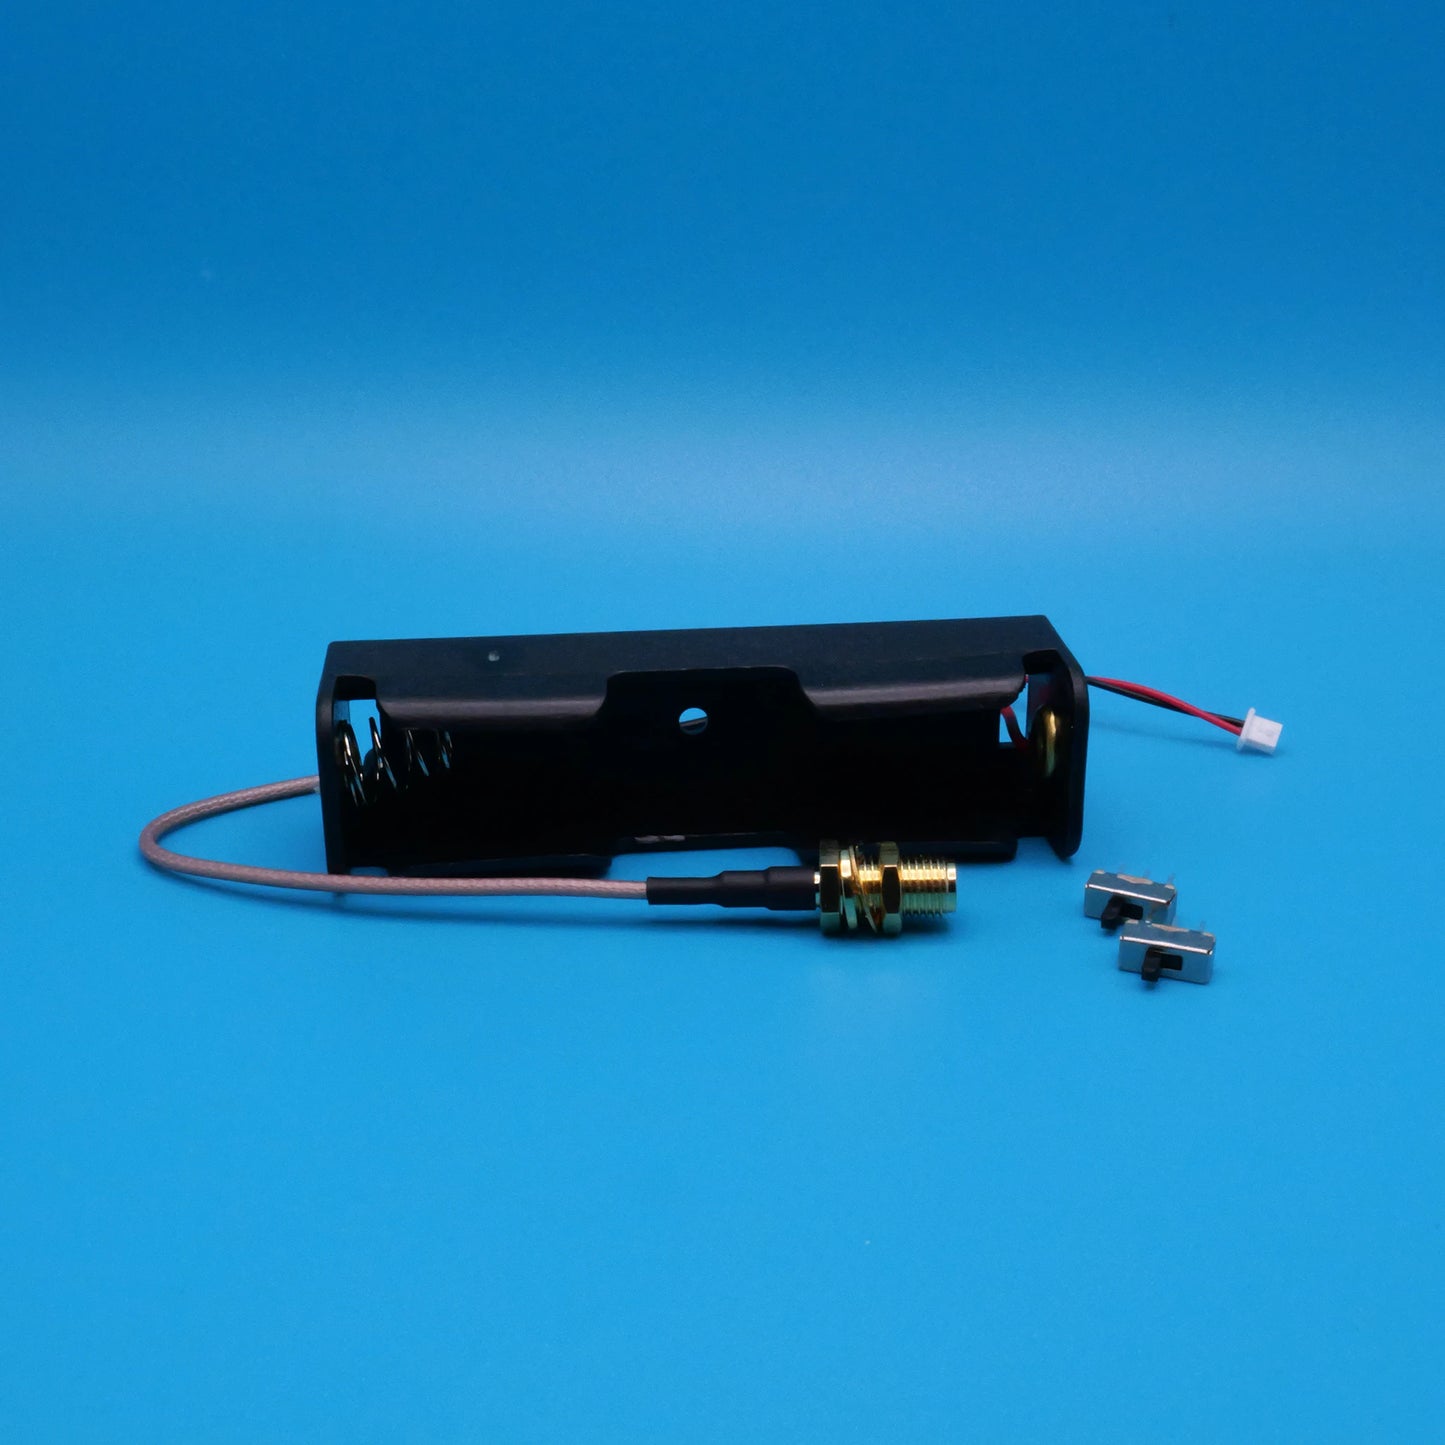 Bender - Heltec V3 Battery Case Hardware Kit - ONLY NEEDED IF PRINTING YOUR OWN BENDER